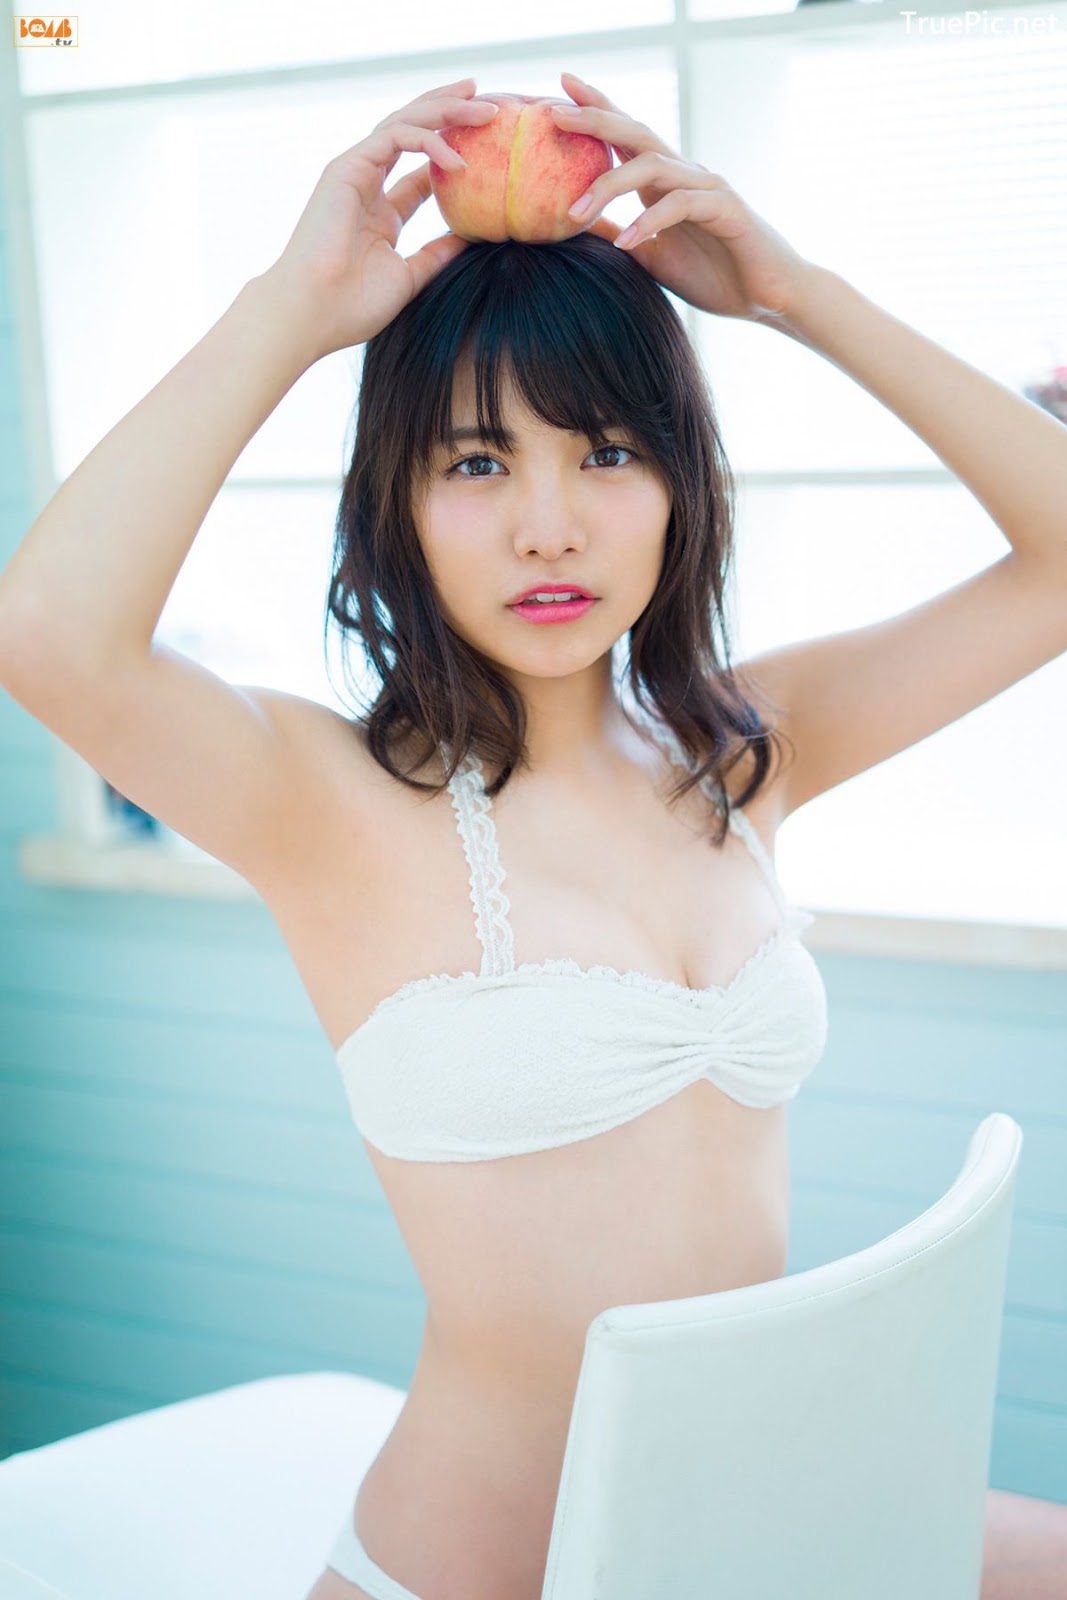 Image Japanese Model - Arisa Matsunaga - GRAVURE Channel Photo Jacket - TruePic.net - Picture-62